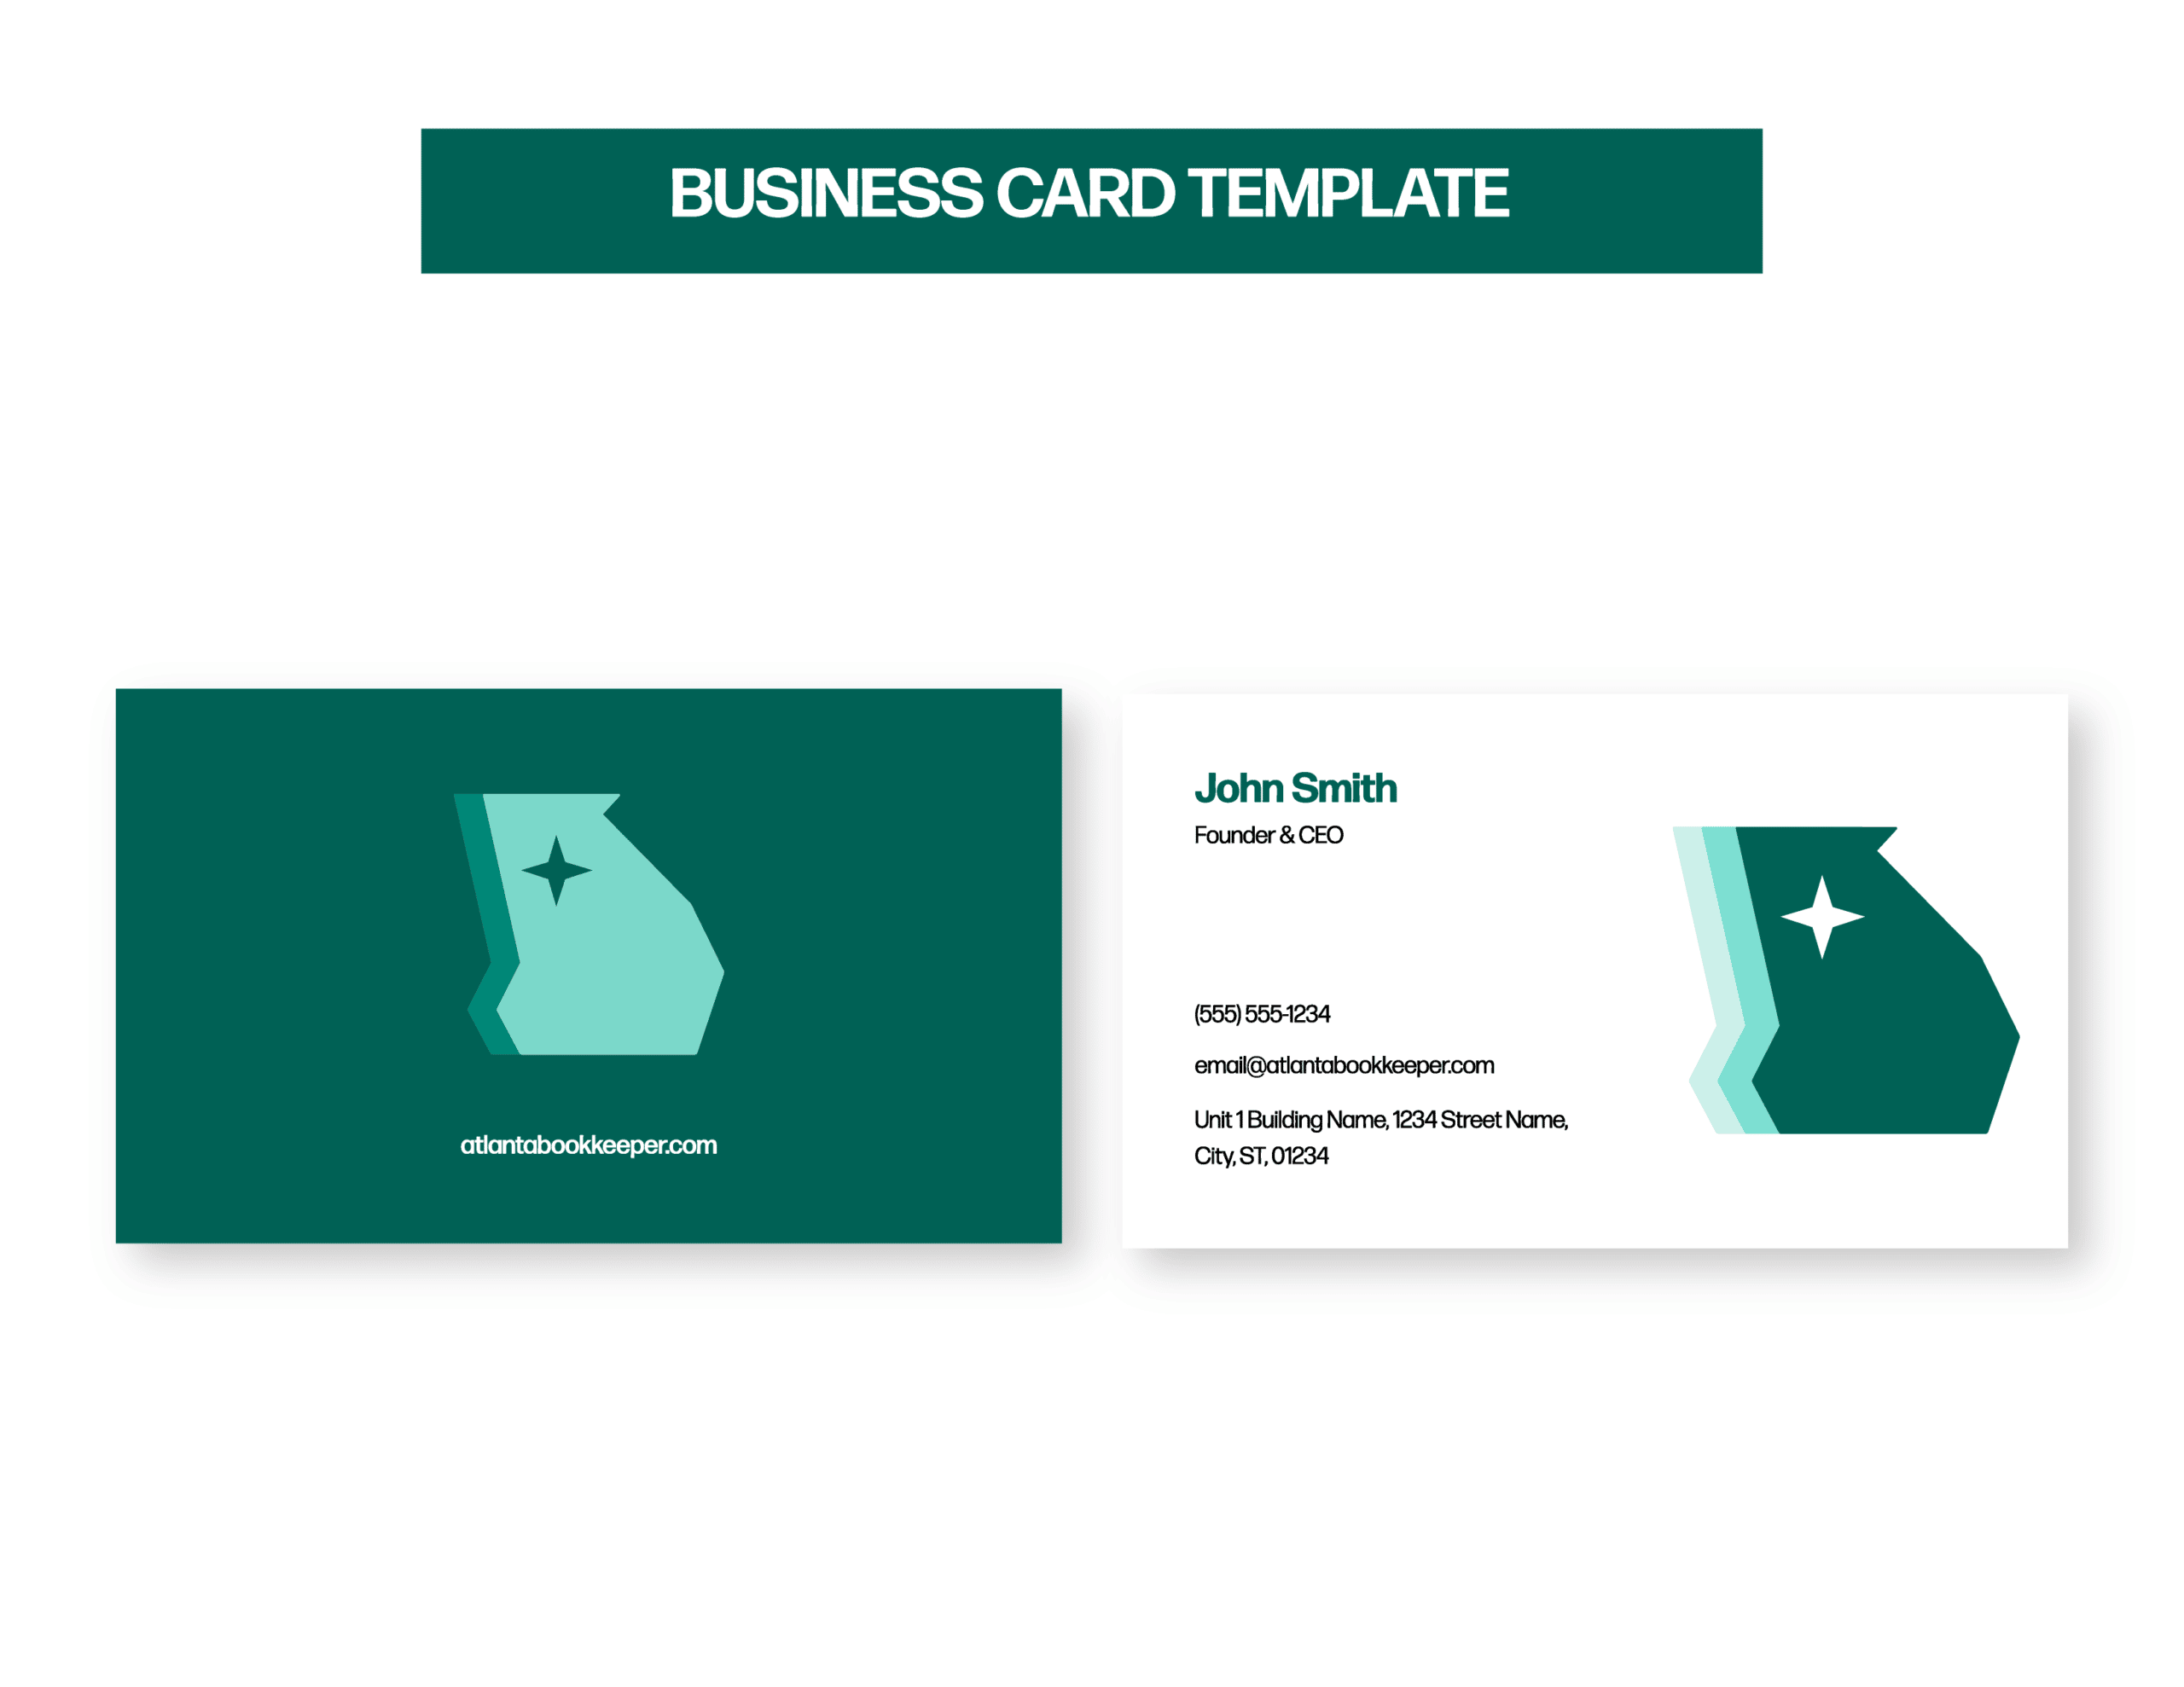 04AtlantaBookkeeper_Showcase_Business Card Template